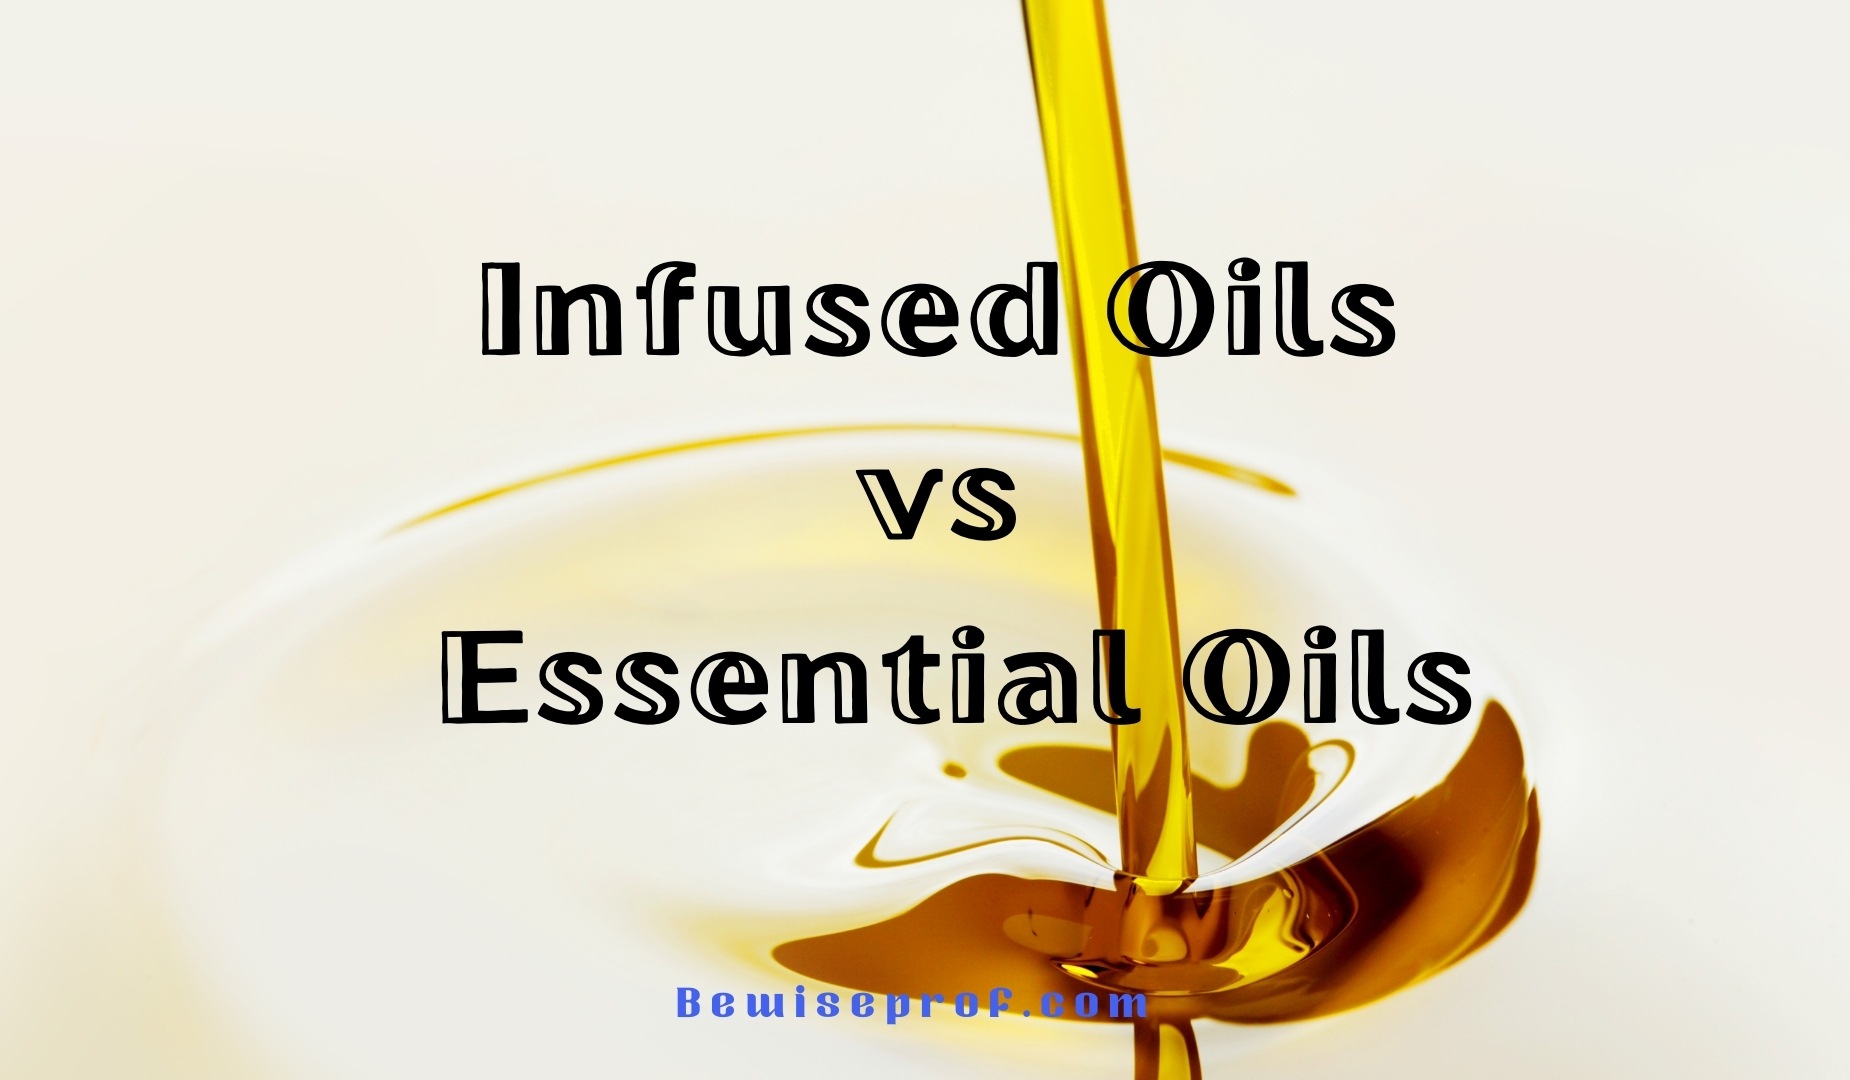 Infused Oils vs Essential Oils